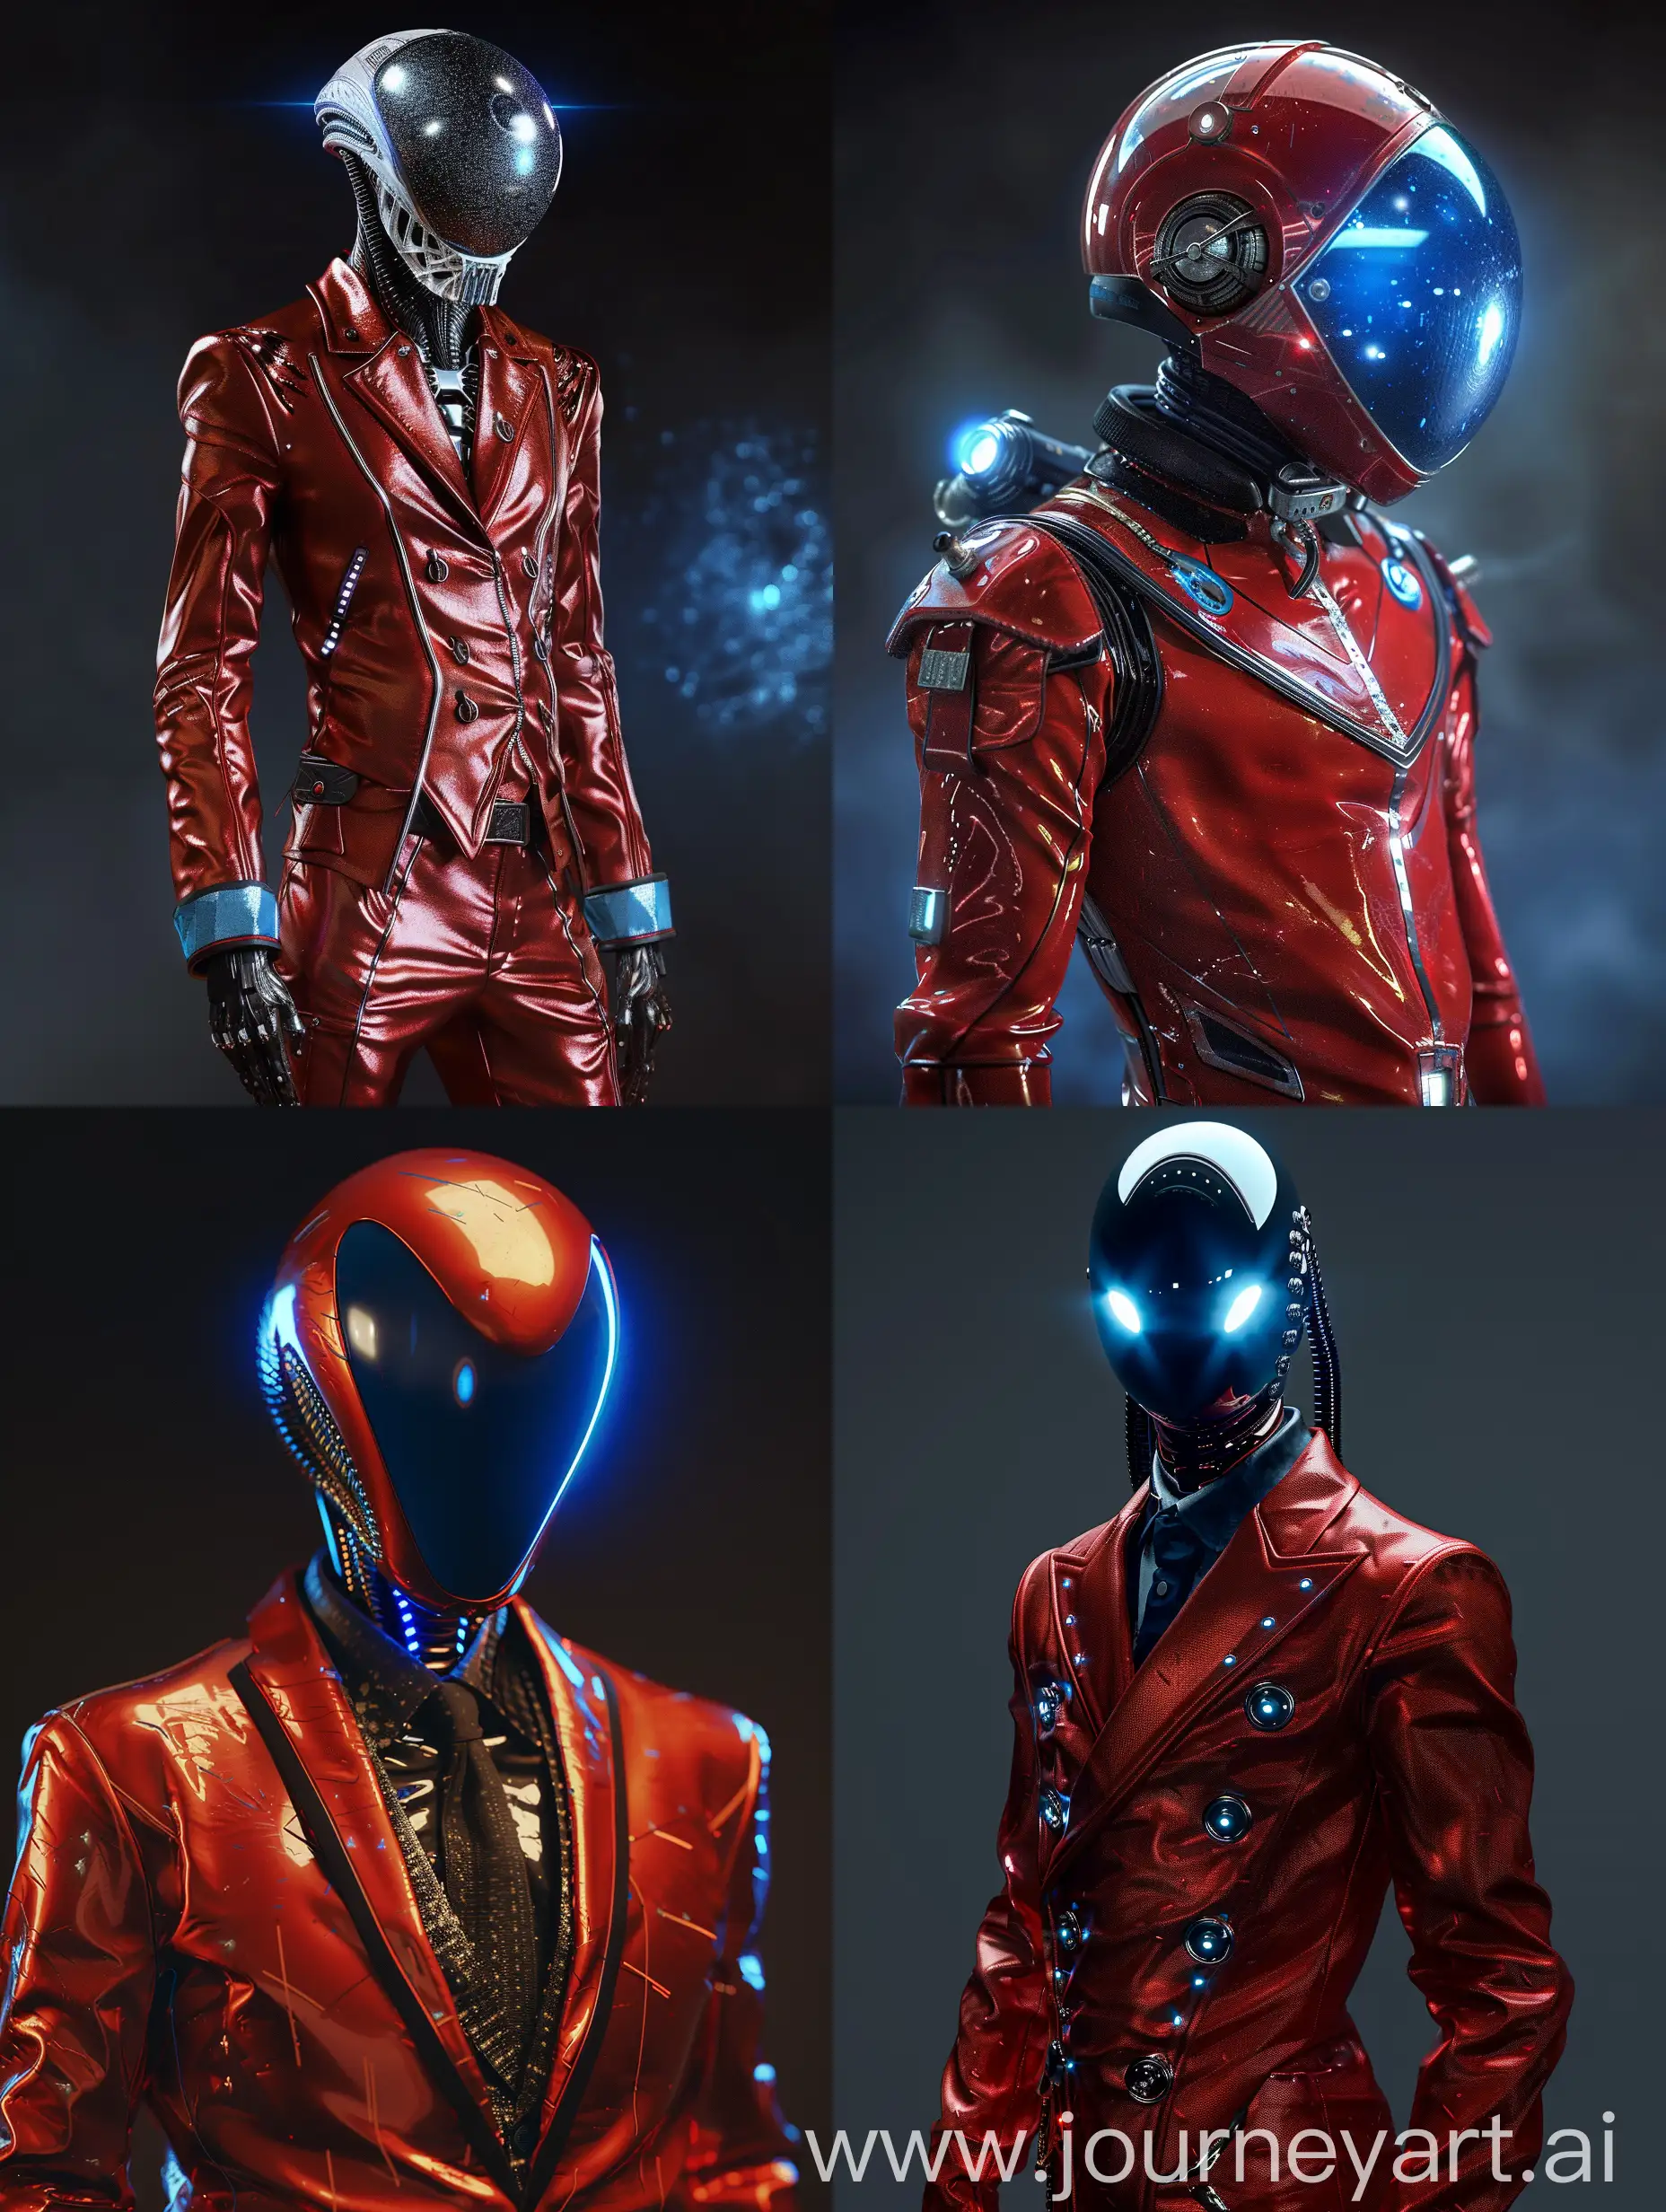 Elegant-Space-Alien-Voyager-in-Pearl-Red-Suit-Cinematic-Studio-Render-with-Crisp-Details-and-Blue-Rim-Light